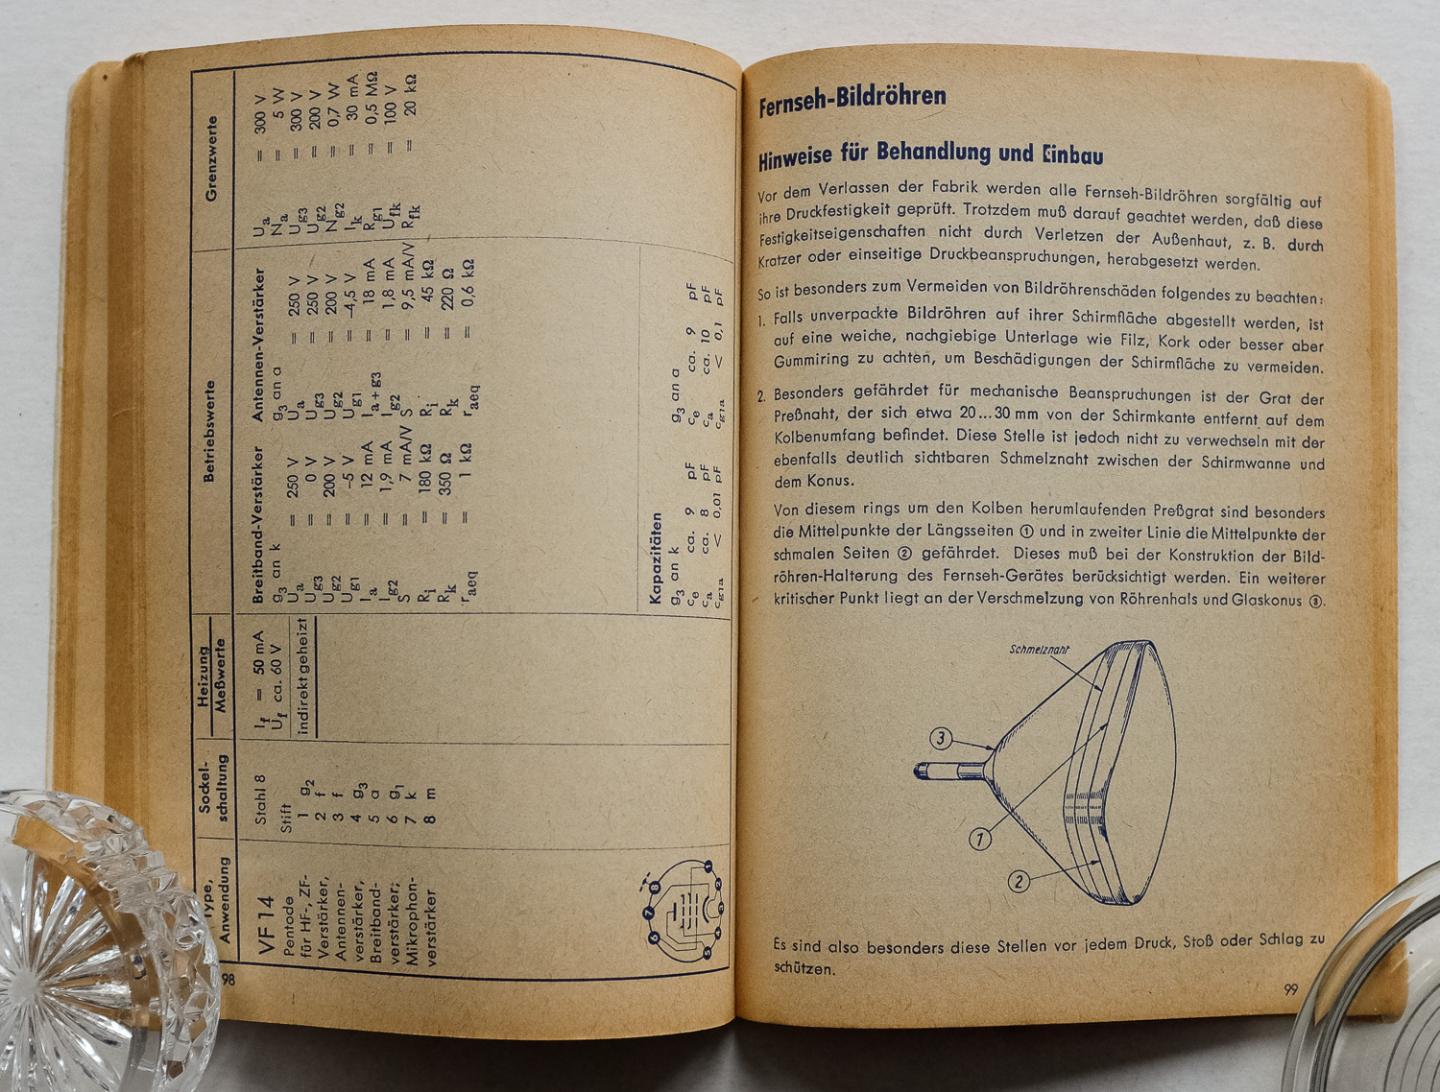  - Telefunken - Receiving tubes - technical data 1957